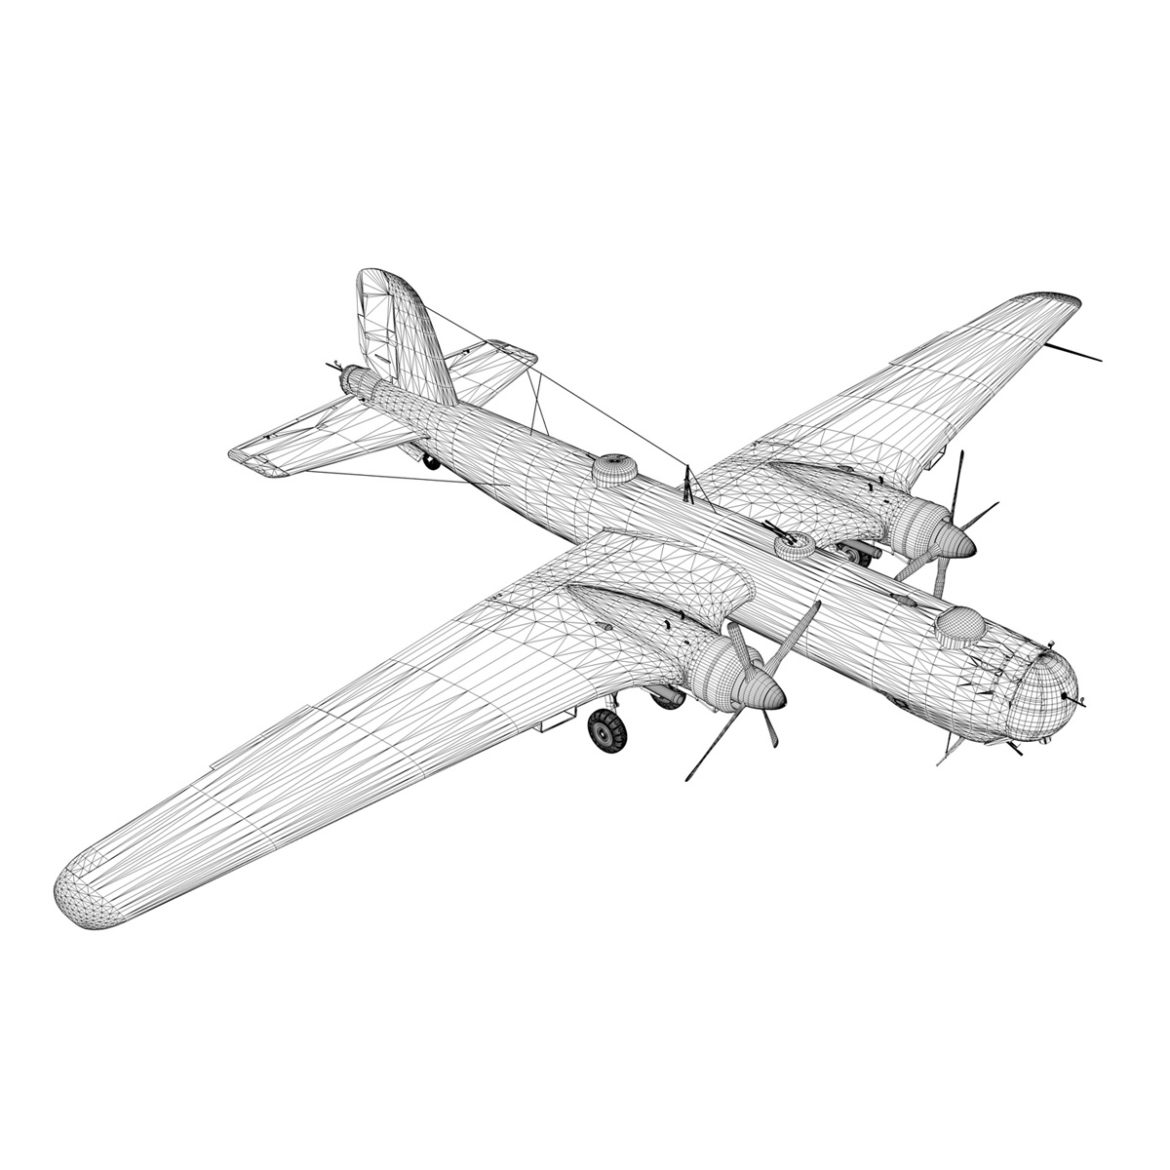 heinkel he-177 – greif – 6nek 3d model 3ds c4d fbx lwo lw lws obj 303987